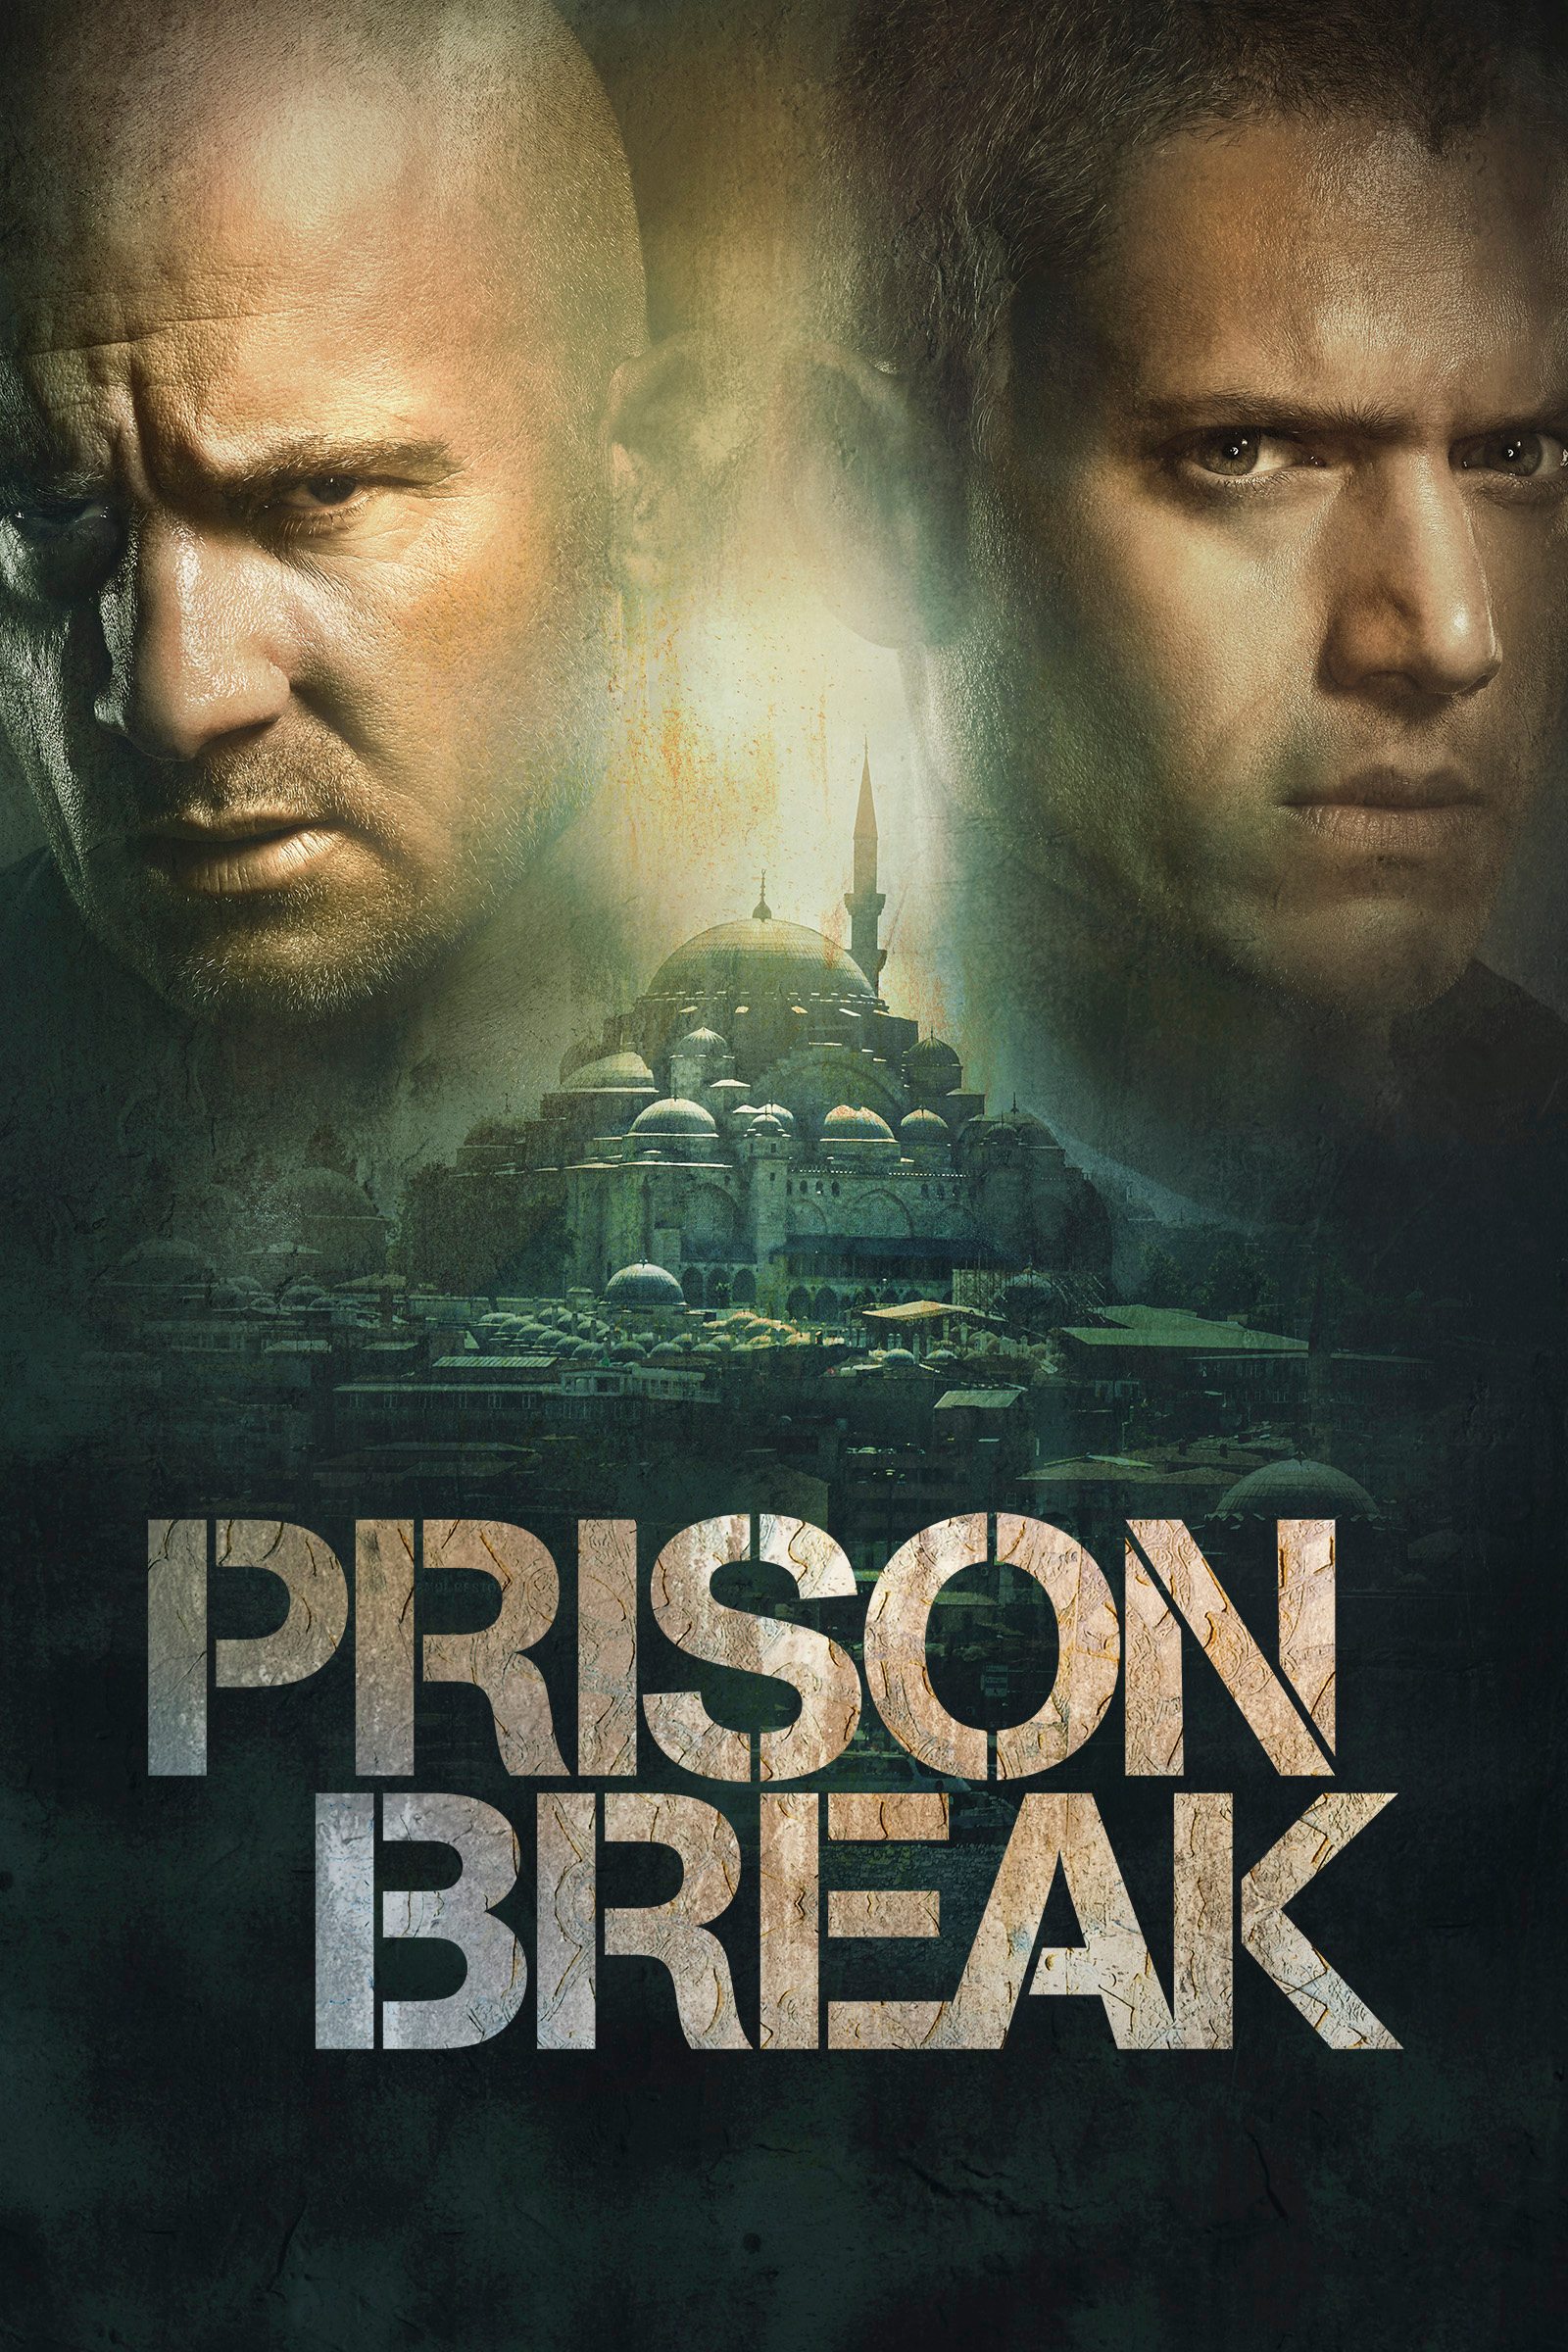 prison break season 2 cast